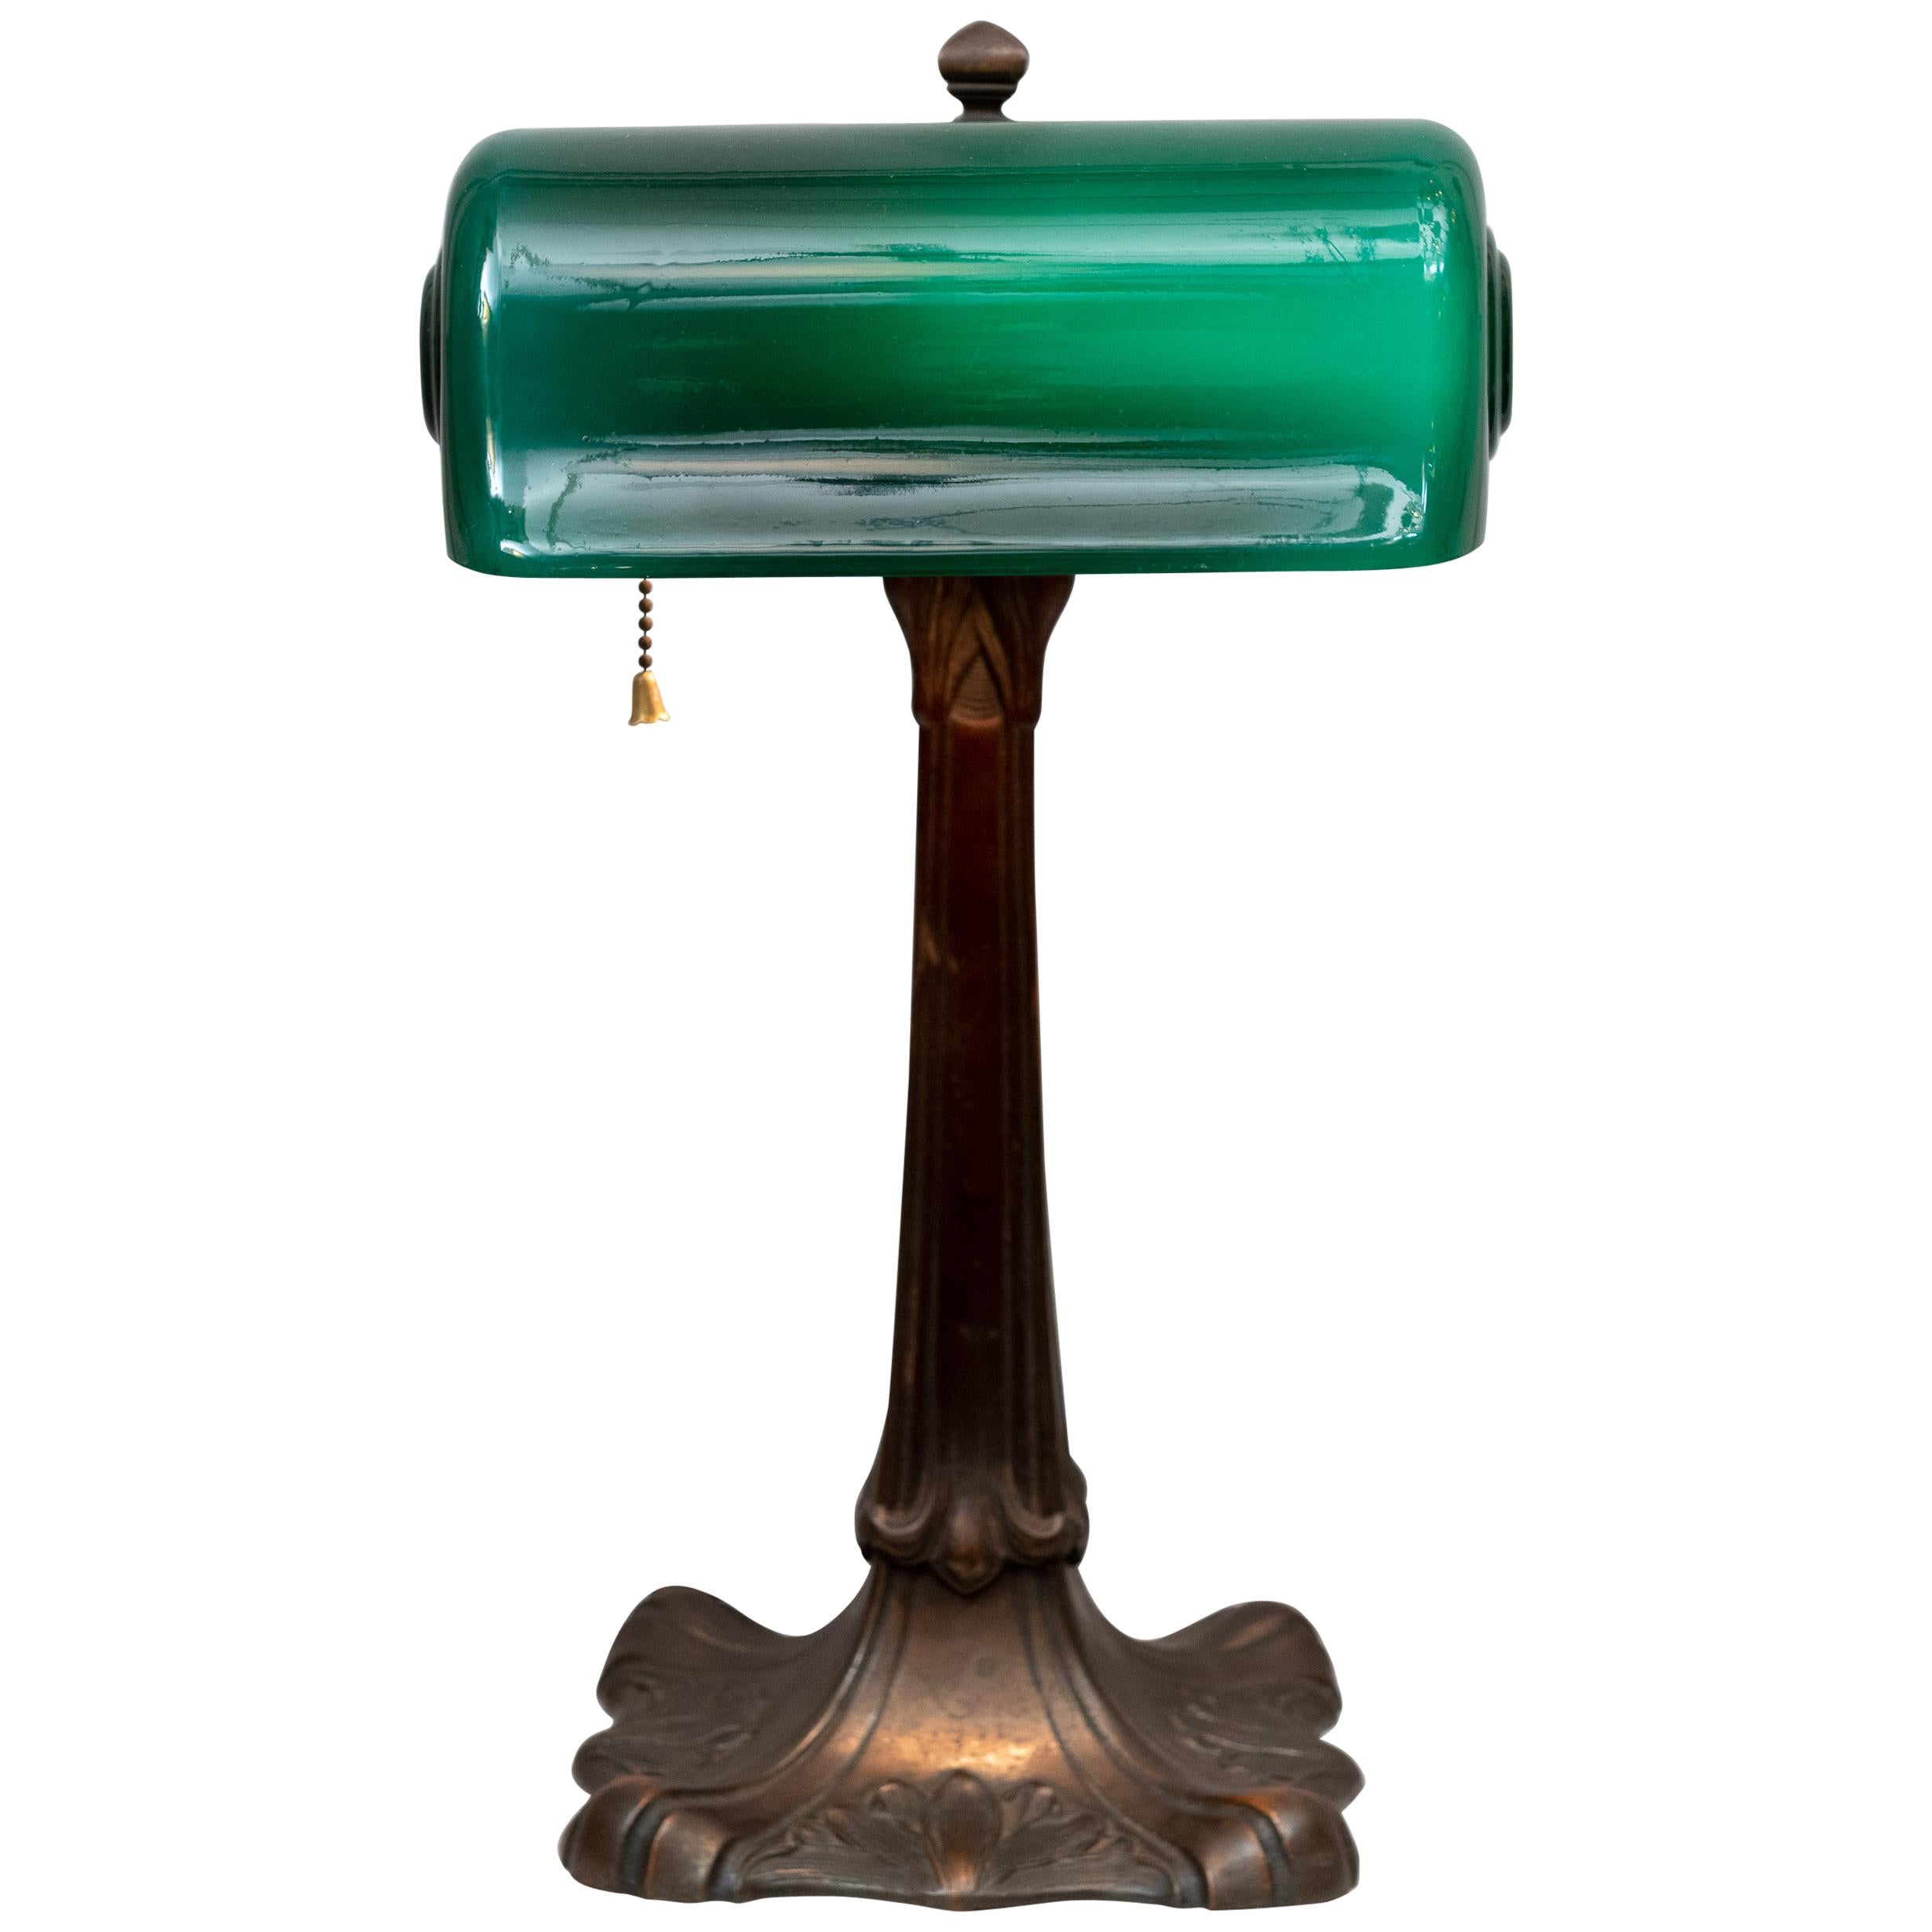 Green Shade Banker's Desk Lamp signed ''Verdelite", circa 1917